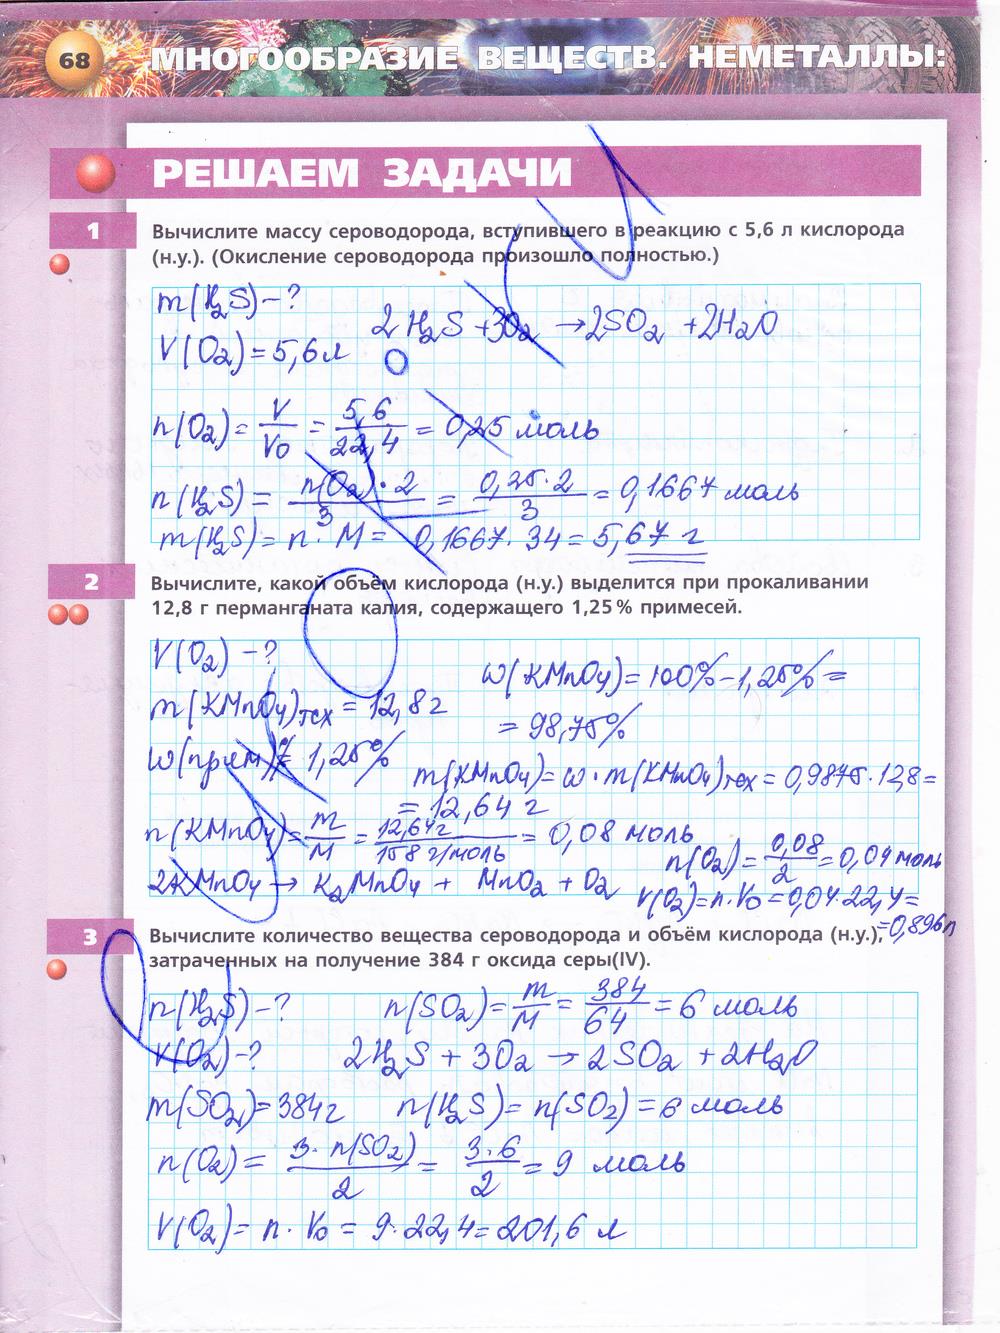 гдз 9 класс тетрадь-тренажёр страница 68 химия Гара